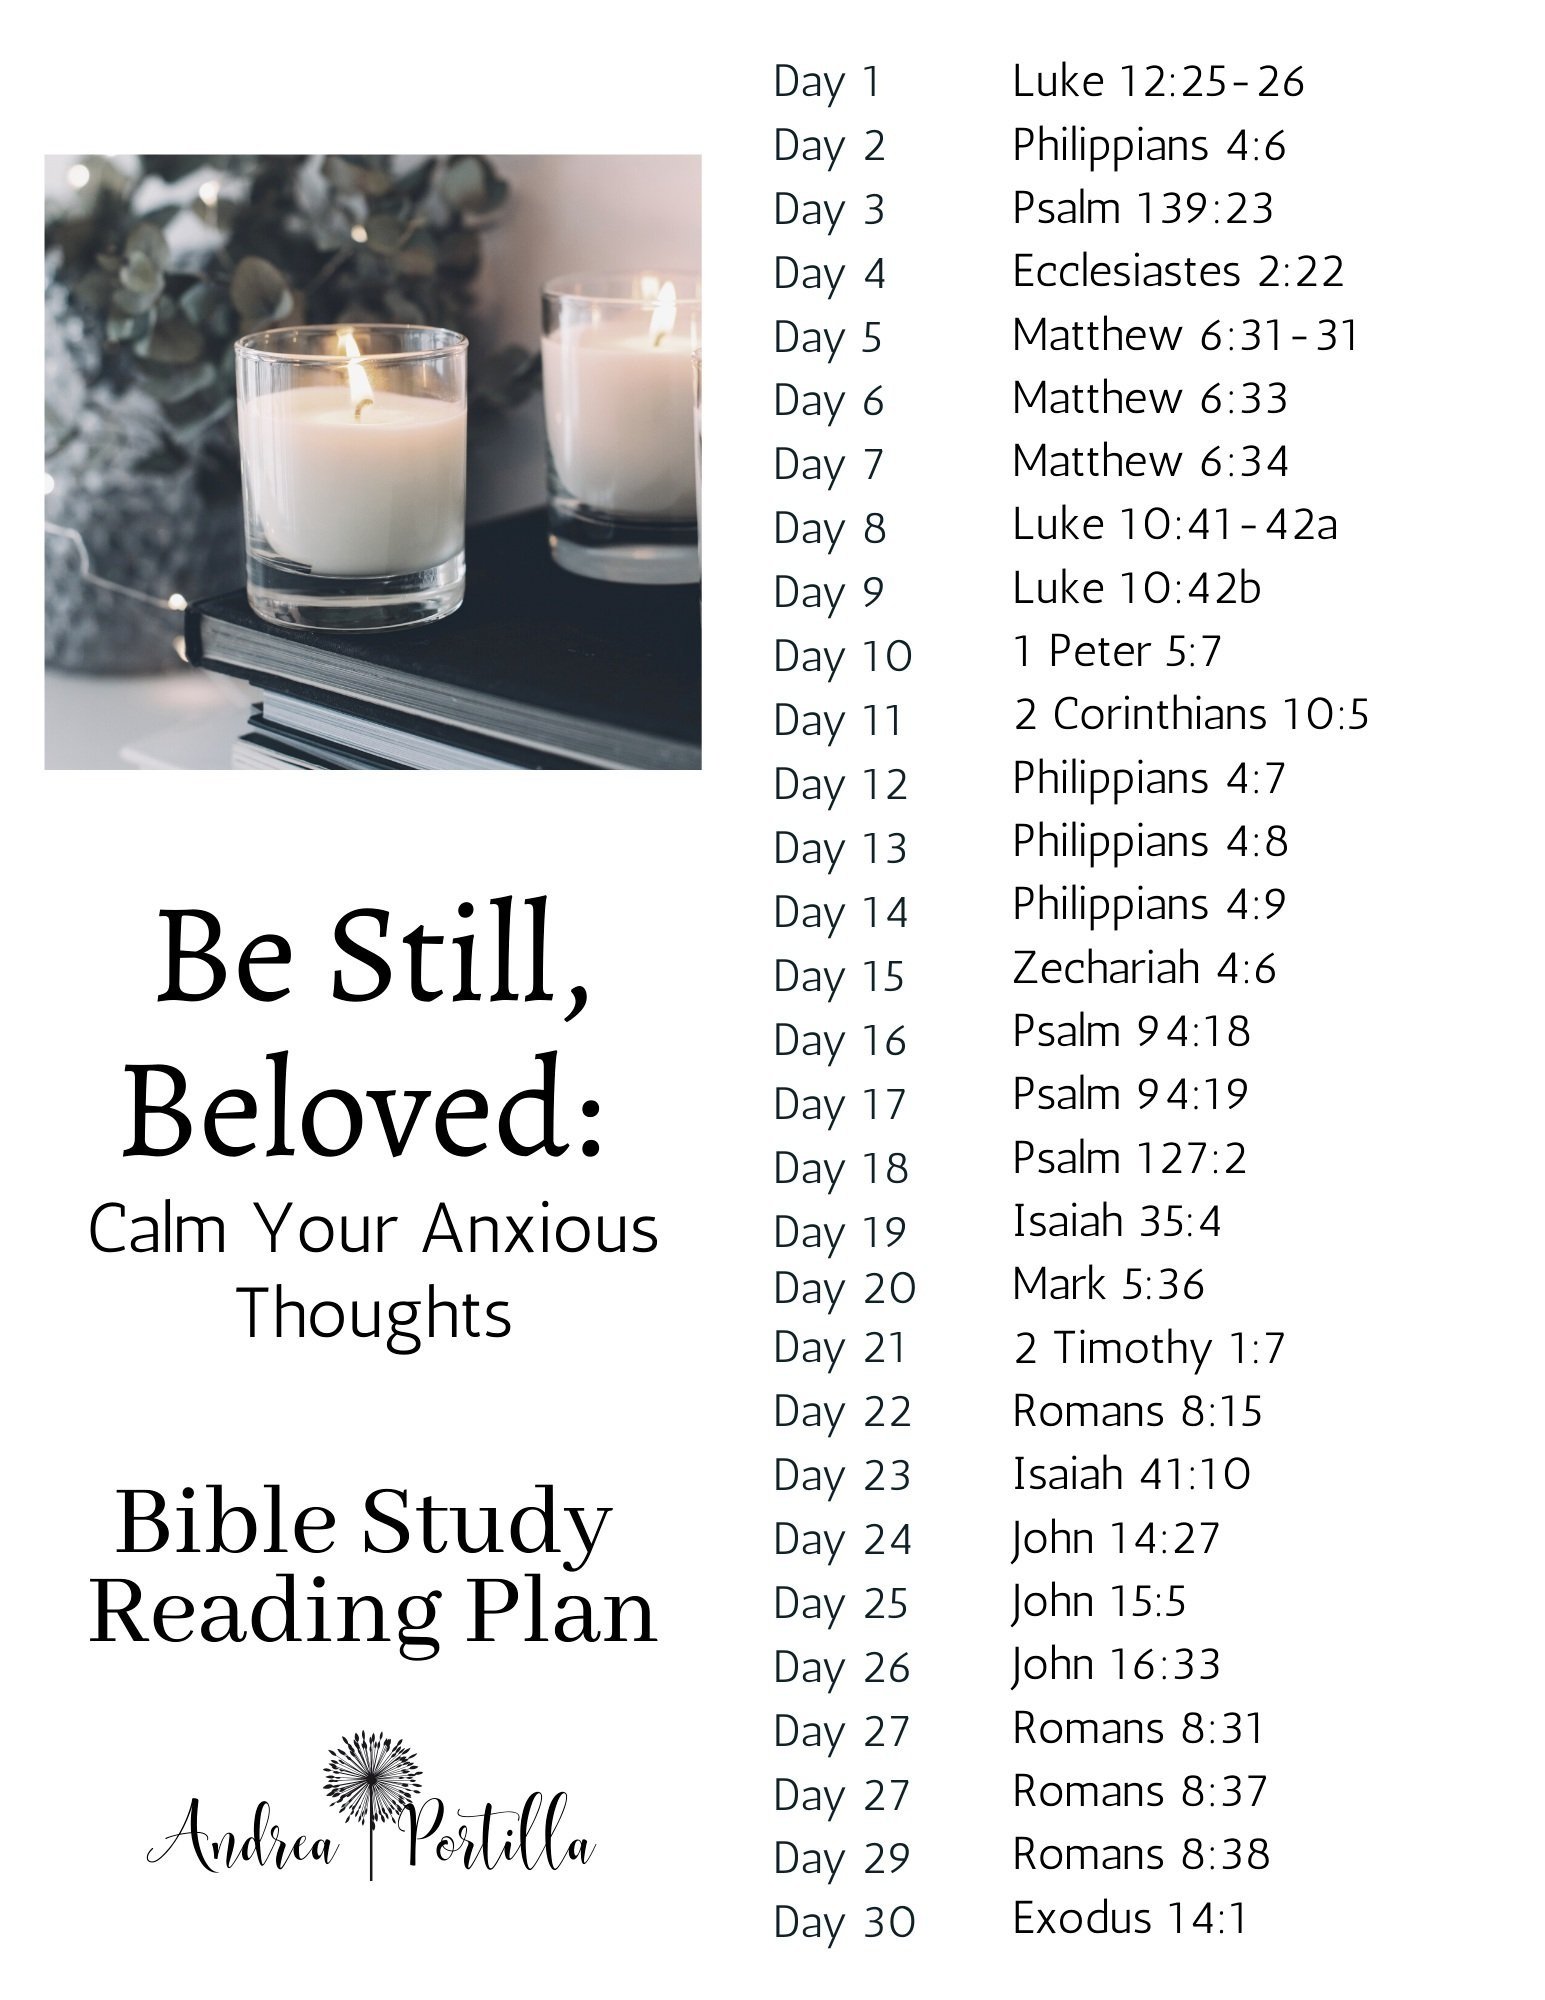 Be Still, Beloved Reading Guide (Copy)